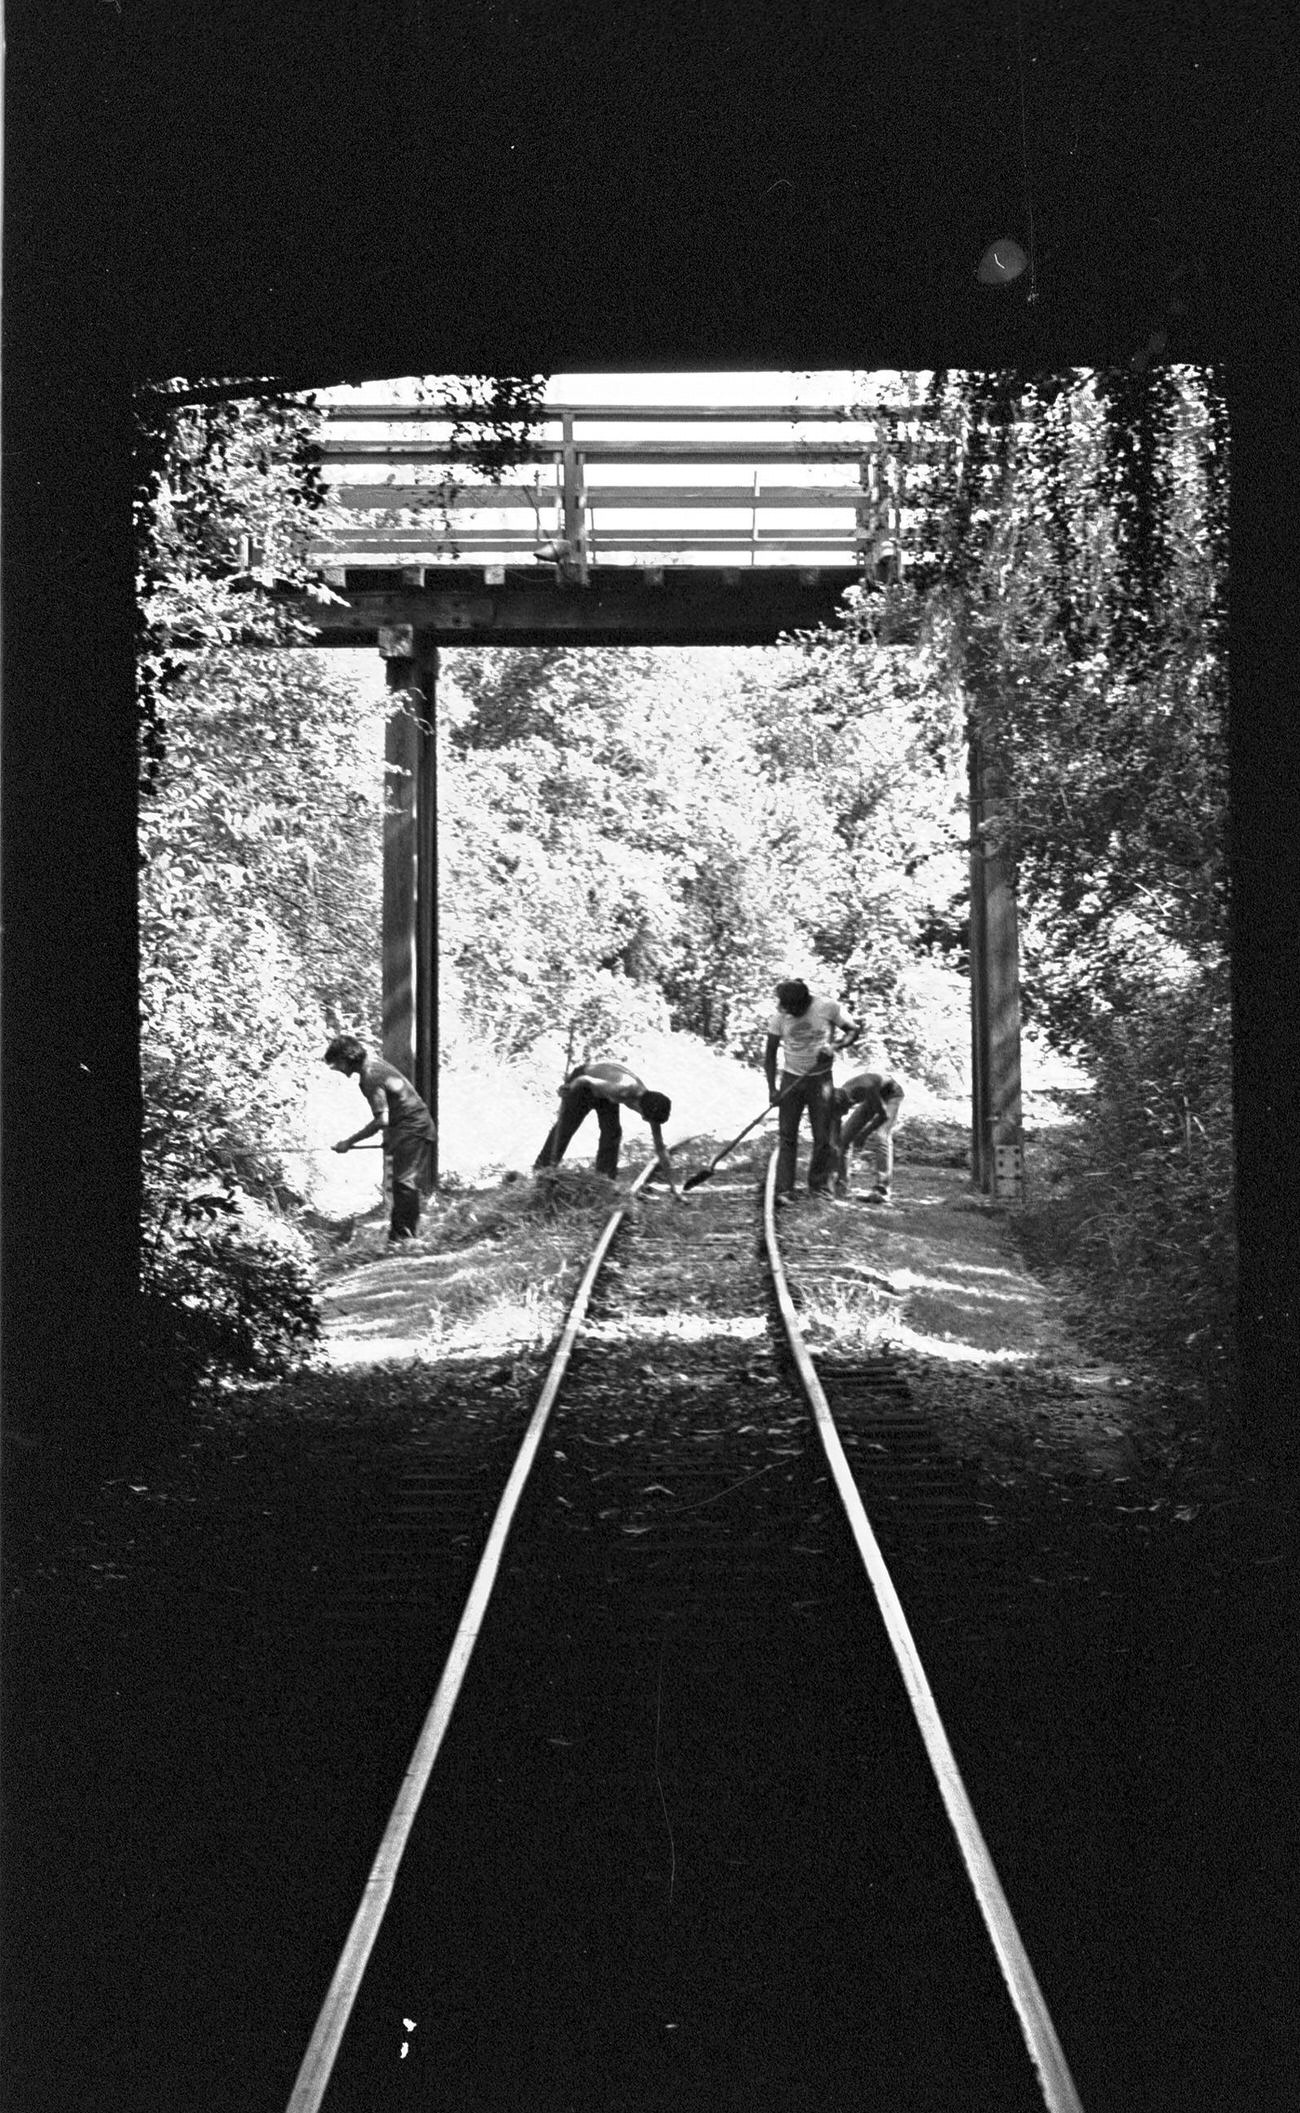 Maintenance on tracks, Six Flags Over Texas, 1978